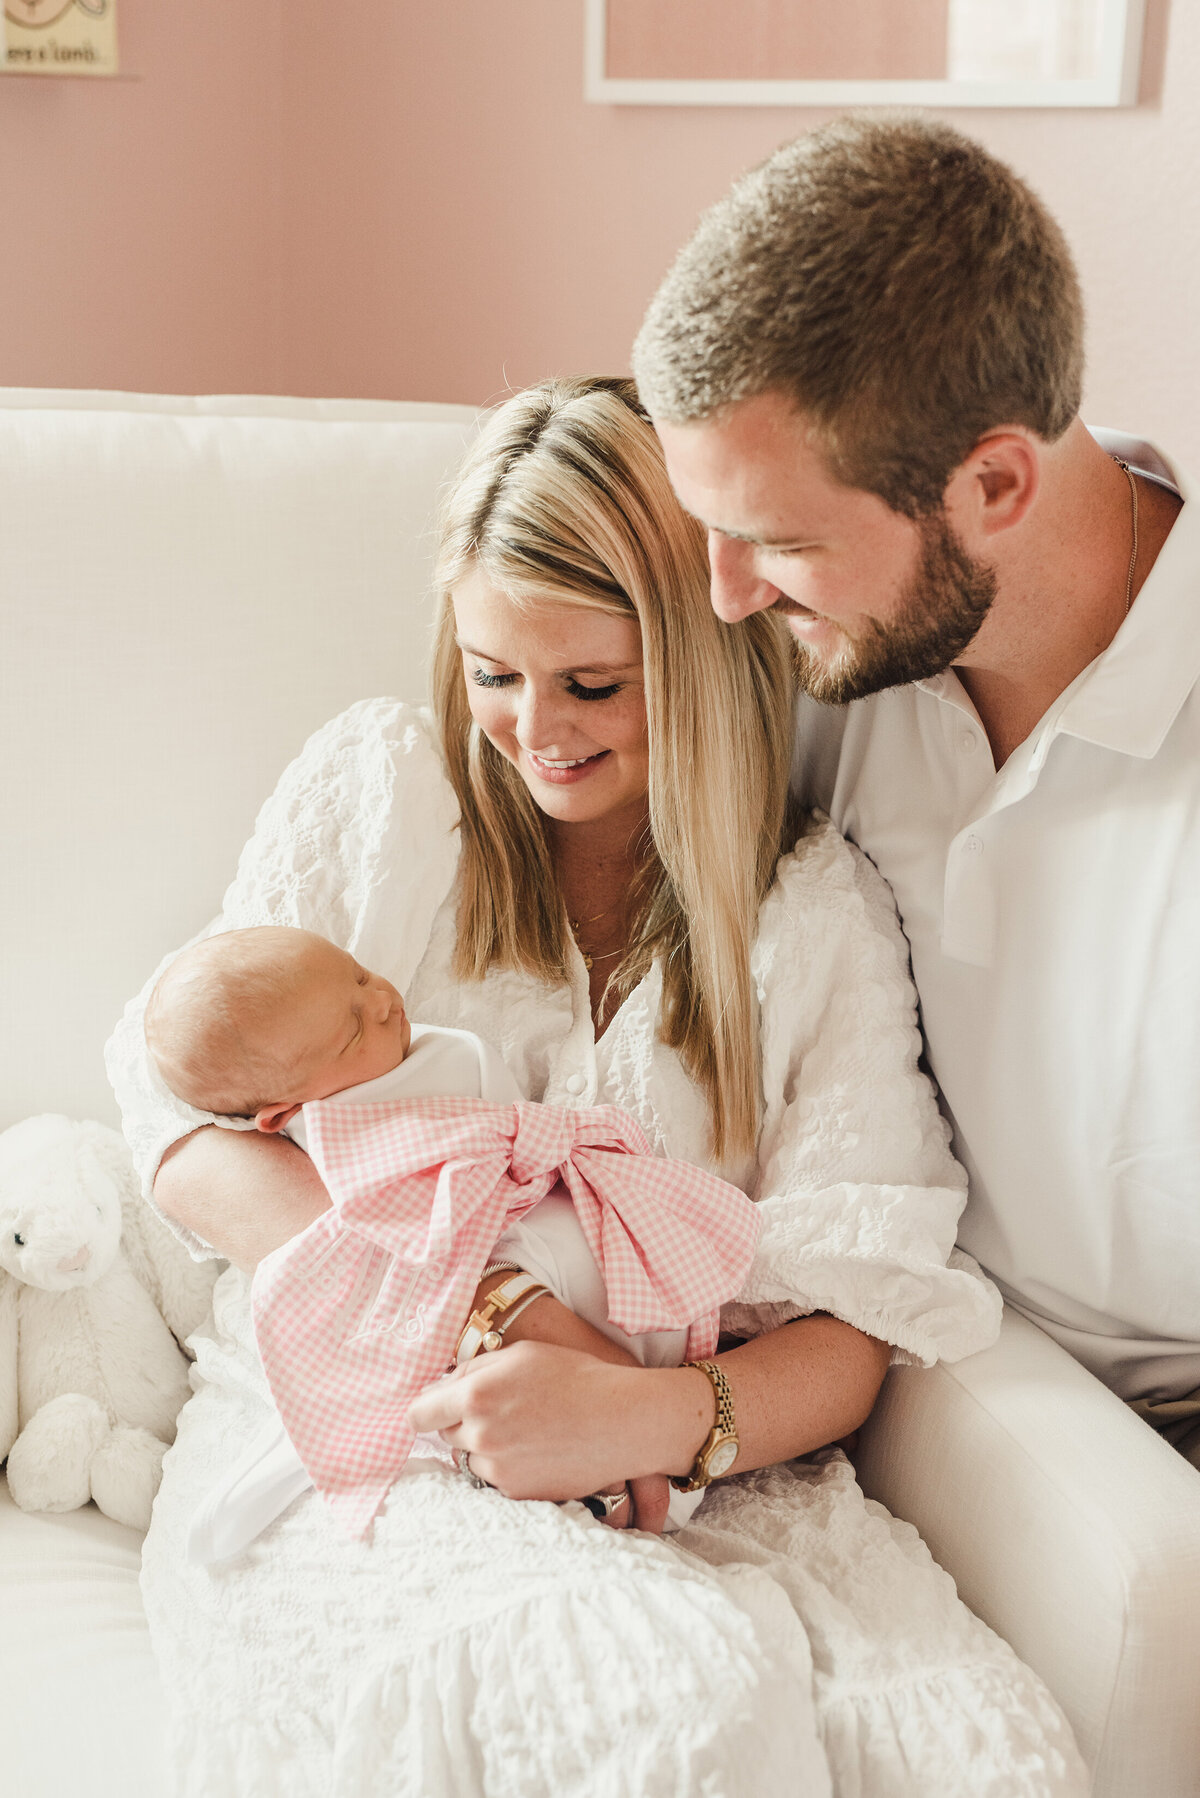 Newborn Photography | Dallas Newborn Photographer | Lindsay Davenport